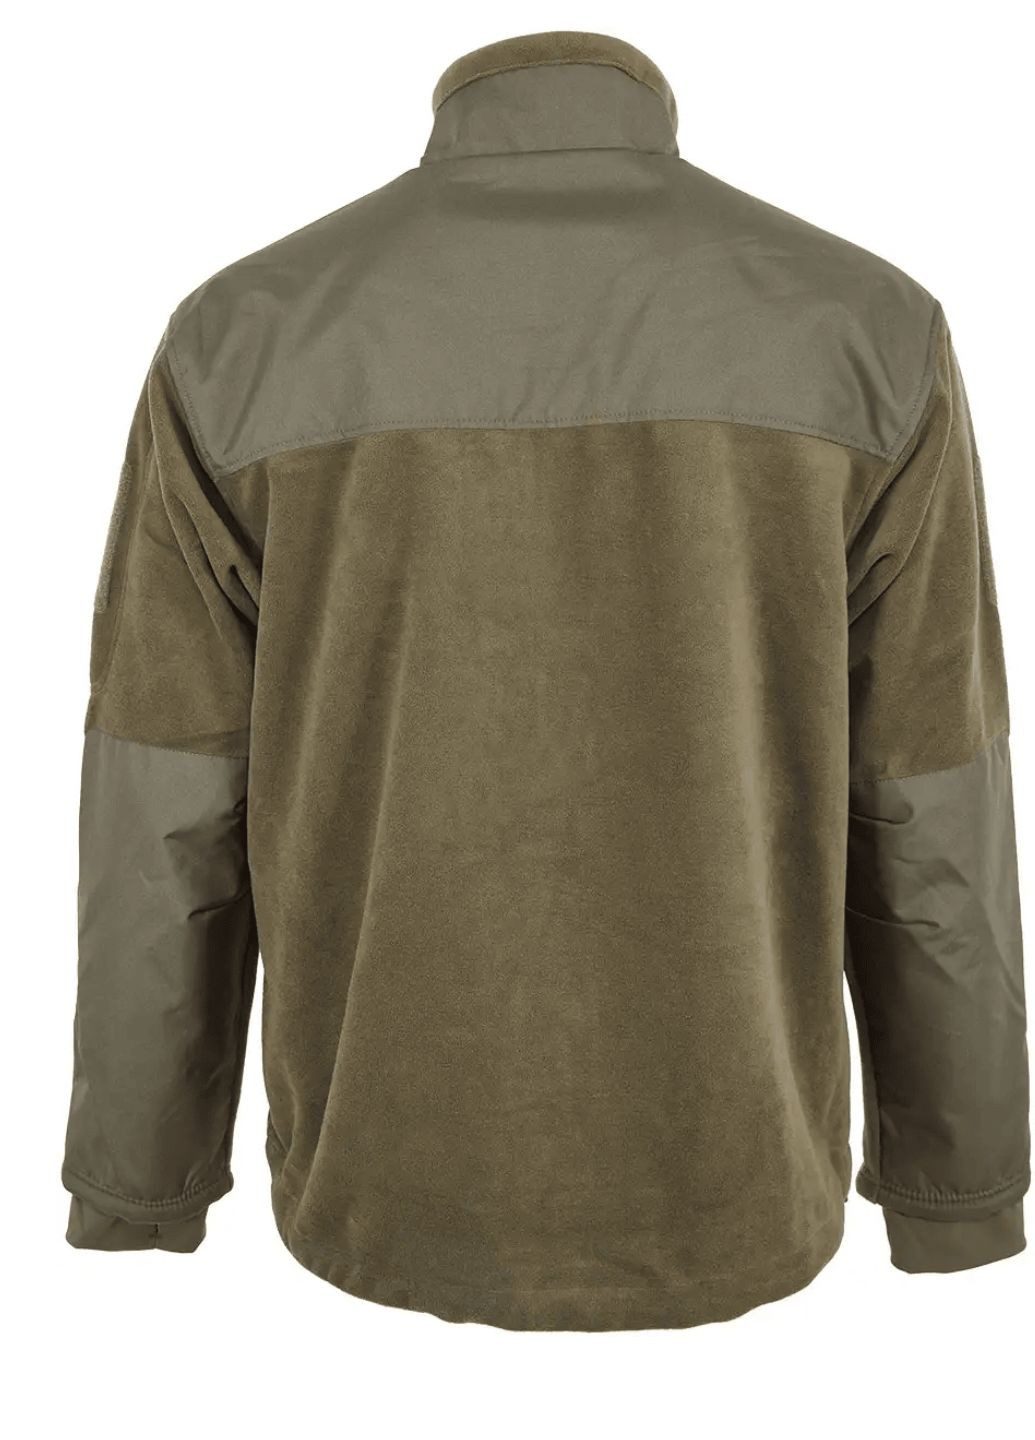 Куртка -Clothing Alpha Fleece Jacket XL Olive Drab Condor alpha fleece jacket olive drab (282940123)